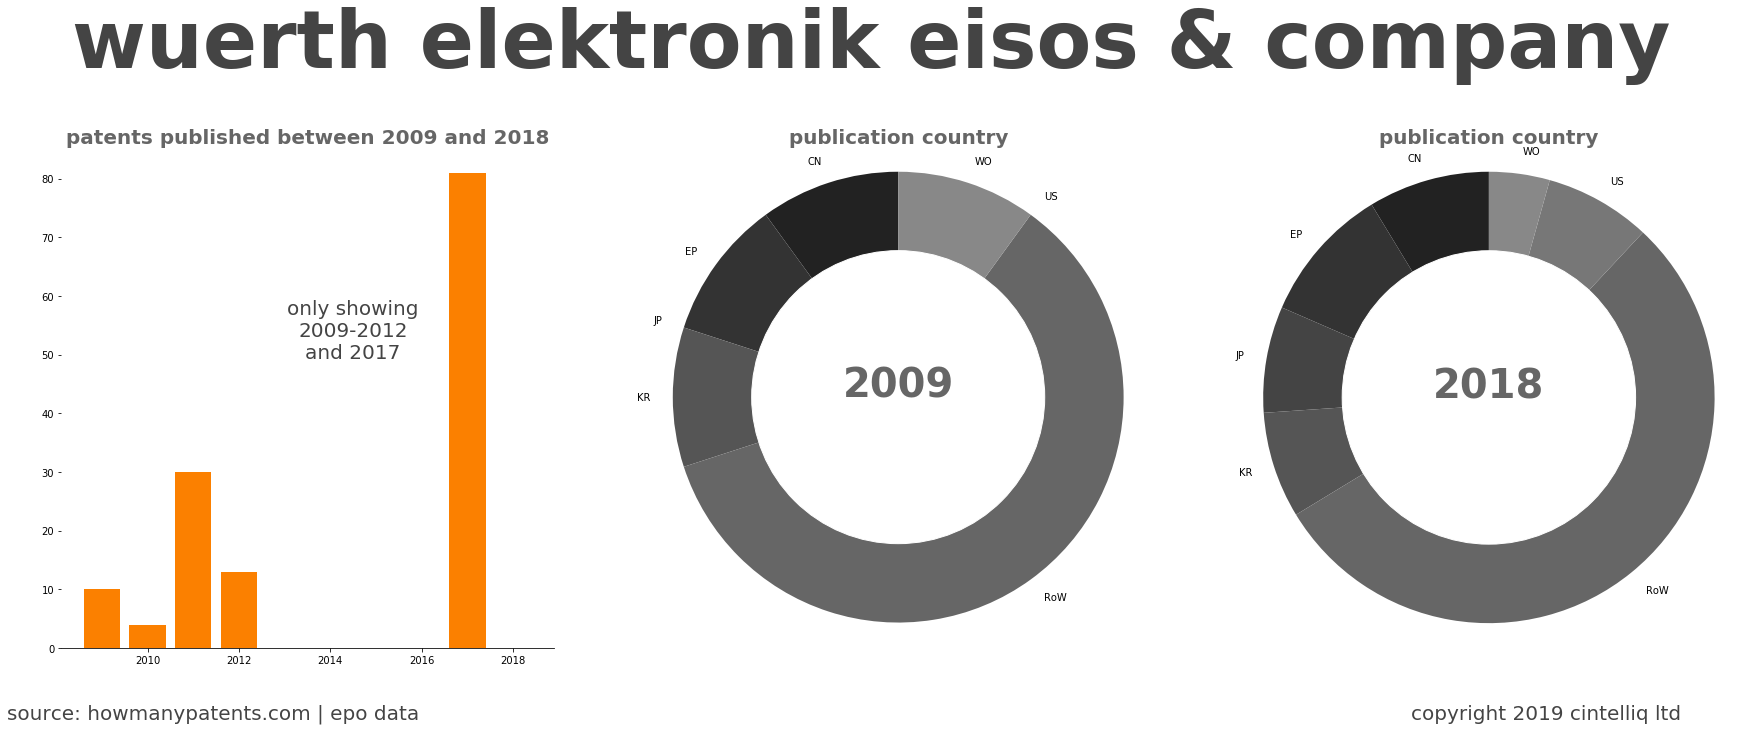 summary of patents for Wuerth Elektronik Eisos & Company